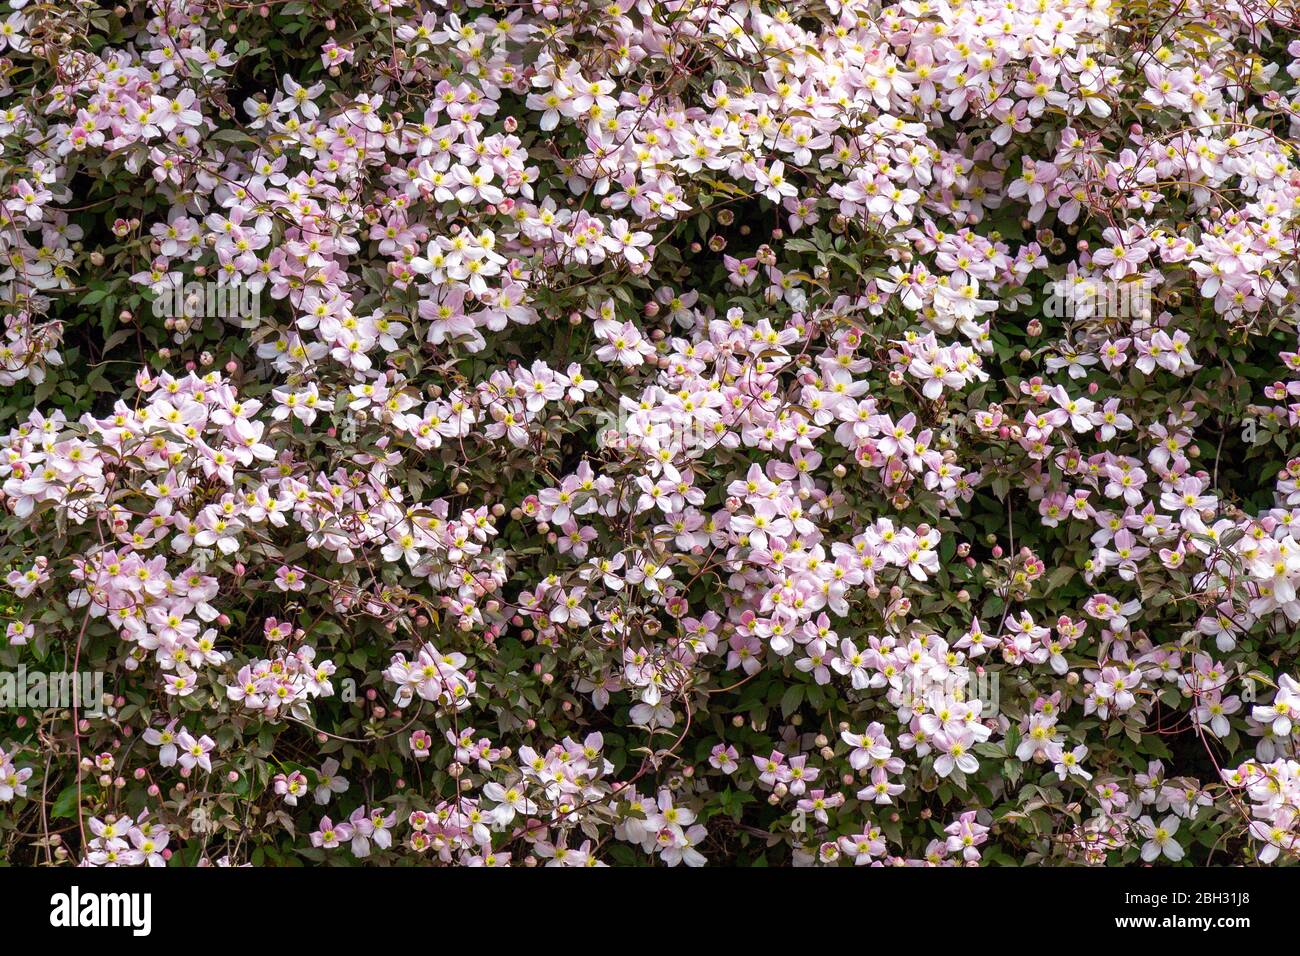 Clematis Montana Rubens in full flower Stock Photo